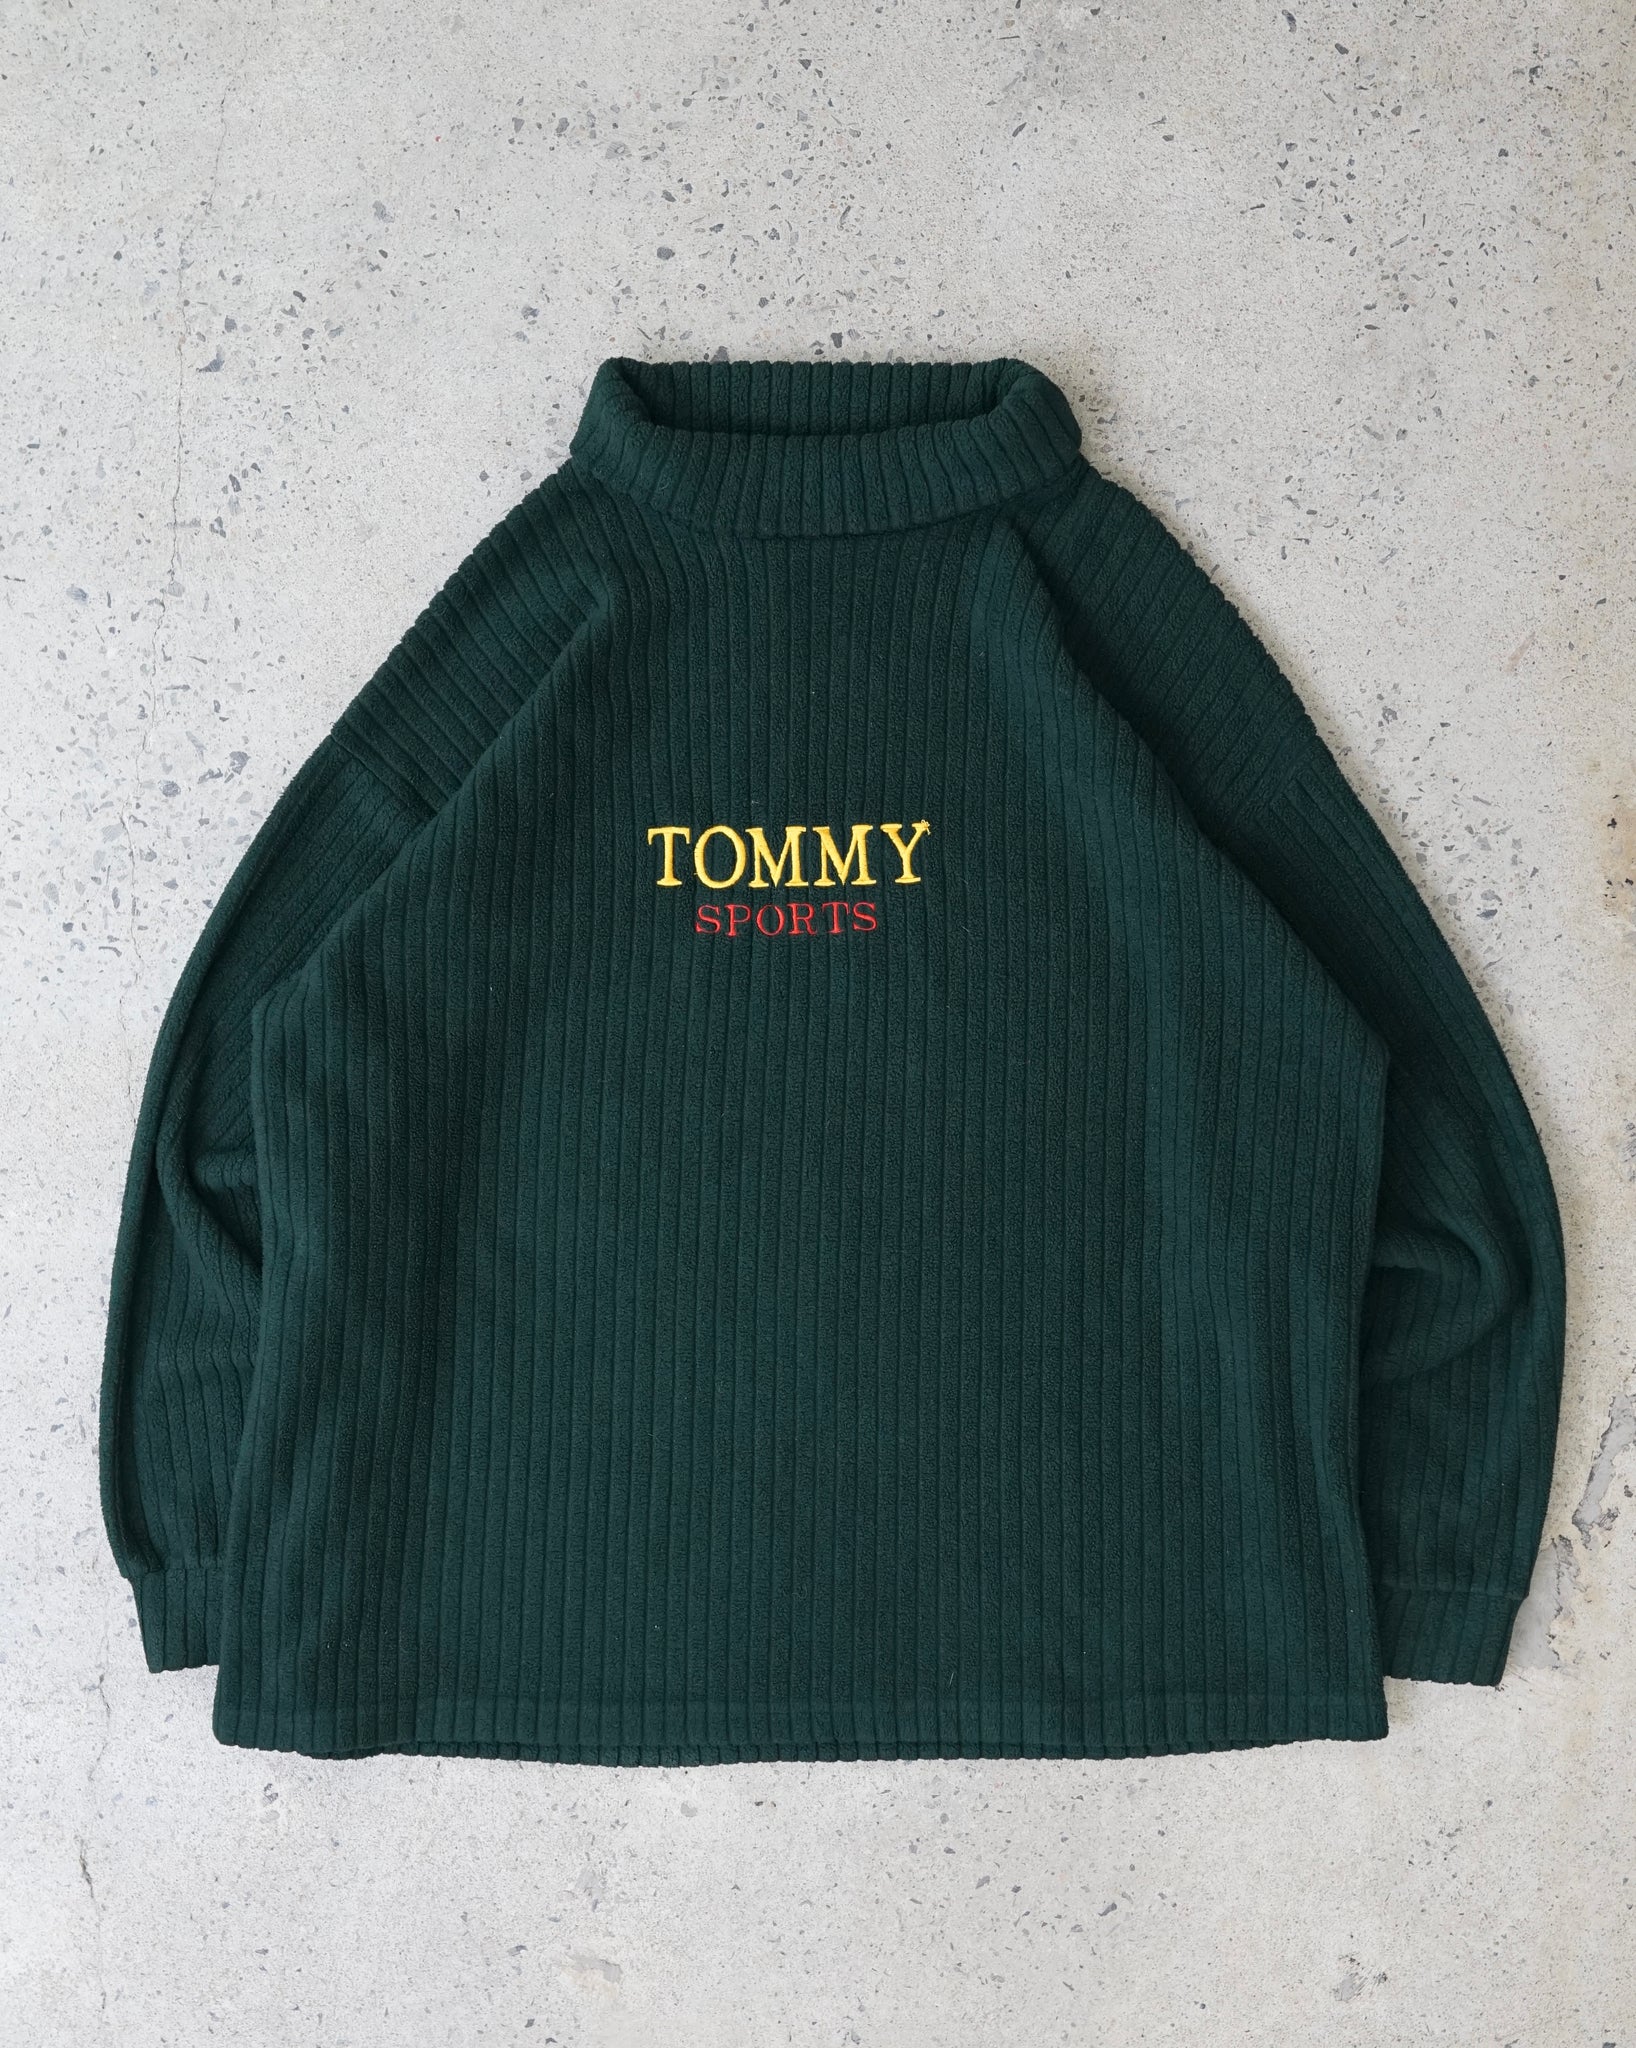 tommy sports mock neck sweater